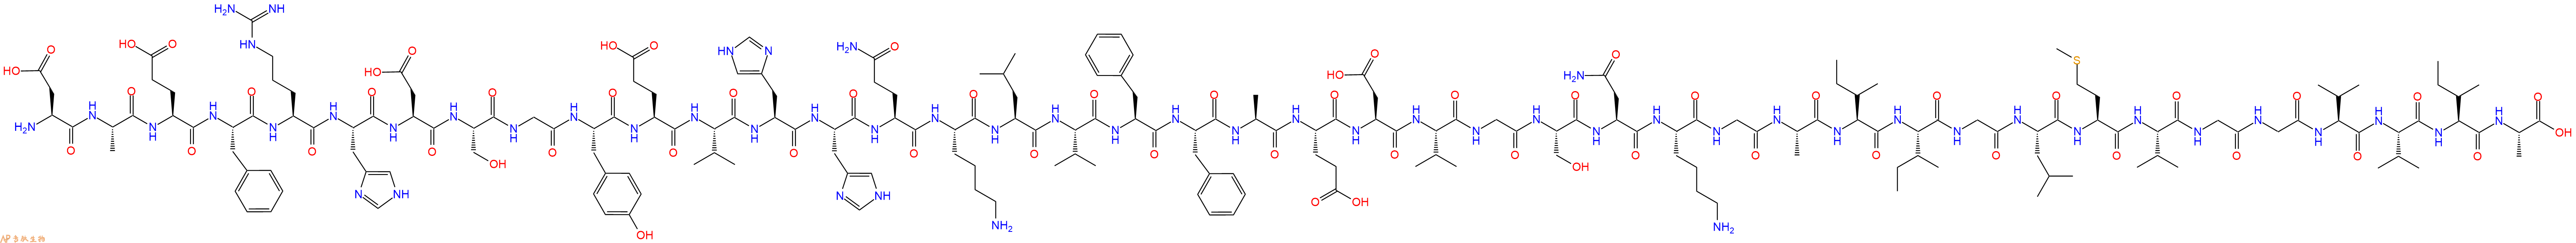 107761-42-2,Amyloid β-Protein (1-42),H2N-Asp-Ala-Glu-Phe-Arg-His-Asp-Ser-Gly-Tyr-Glu-Val-His-His-Gln-Lys-Leu-Val-Phe-Phe-Ala-Glu-Asp-Val-Gly-Ser-Asn-Lys-Gly-Ala-Ile-Ile-Gly-Leu-Met-Val-Gly-Gly-Val-Val-Ile-Ala-COOH,H2N-DAEFRHDSGYEVHHQKLVFFAEDVGSNKGAIIGLMVGGVVIA-OH